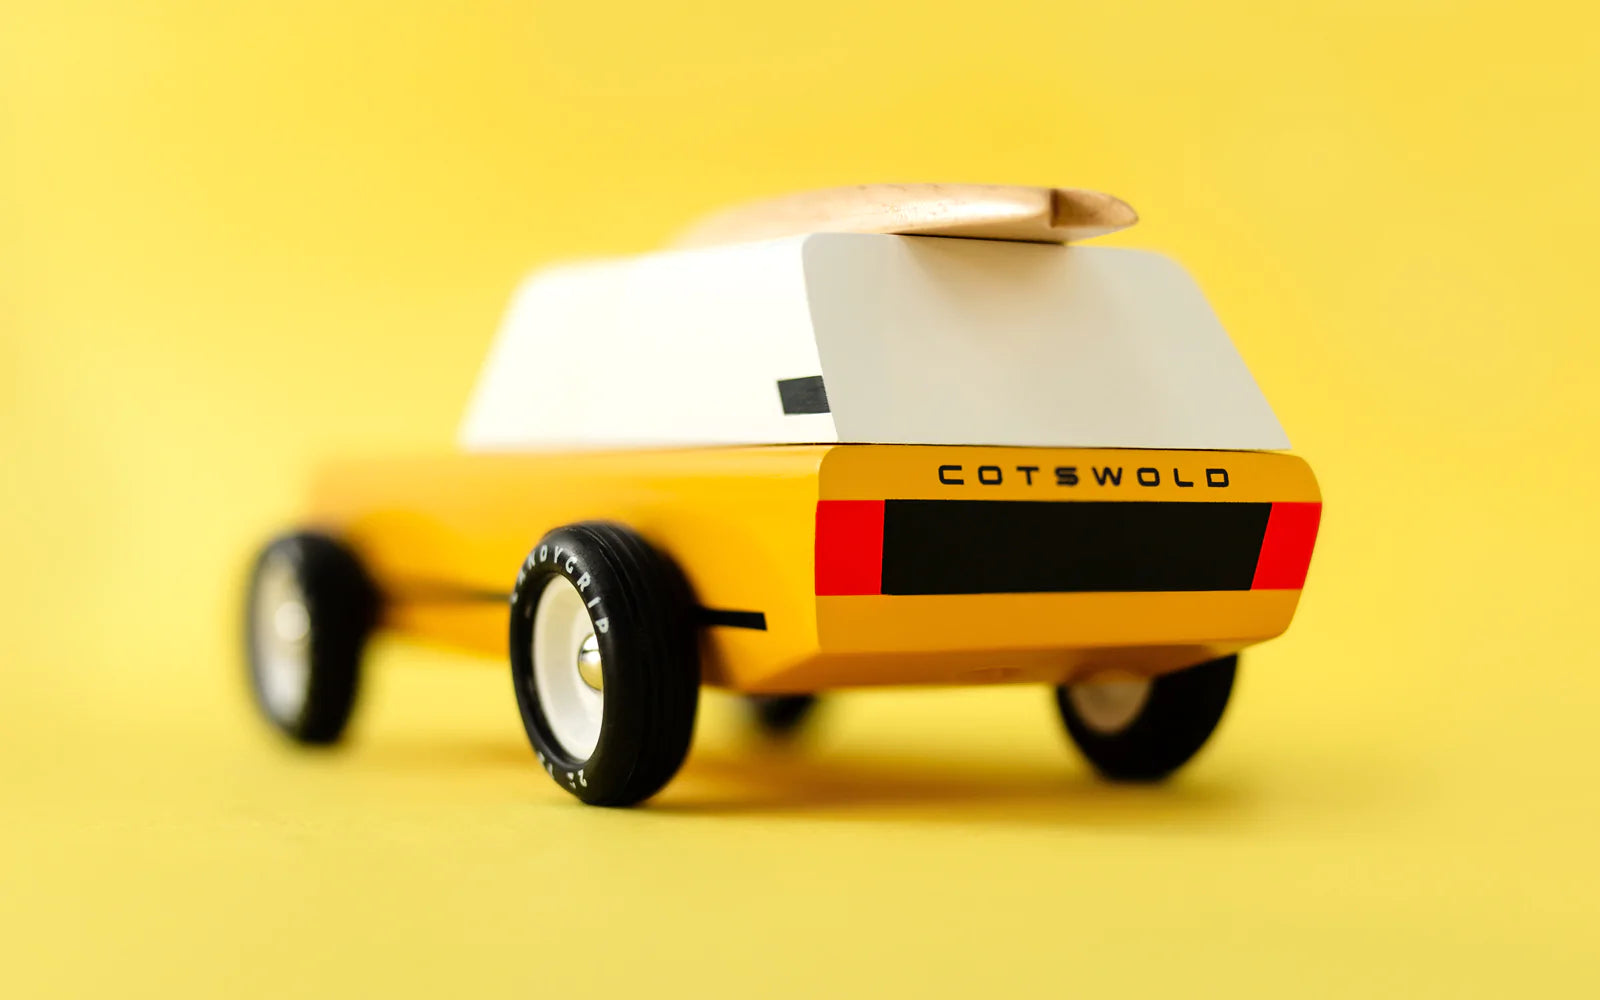 Cotswold Gold Car